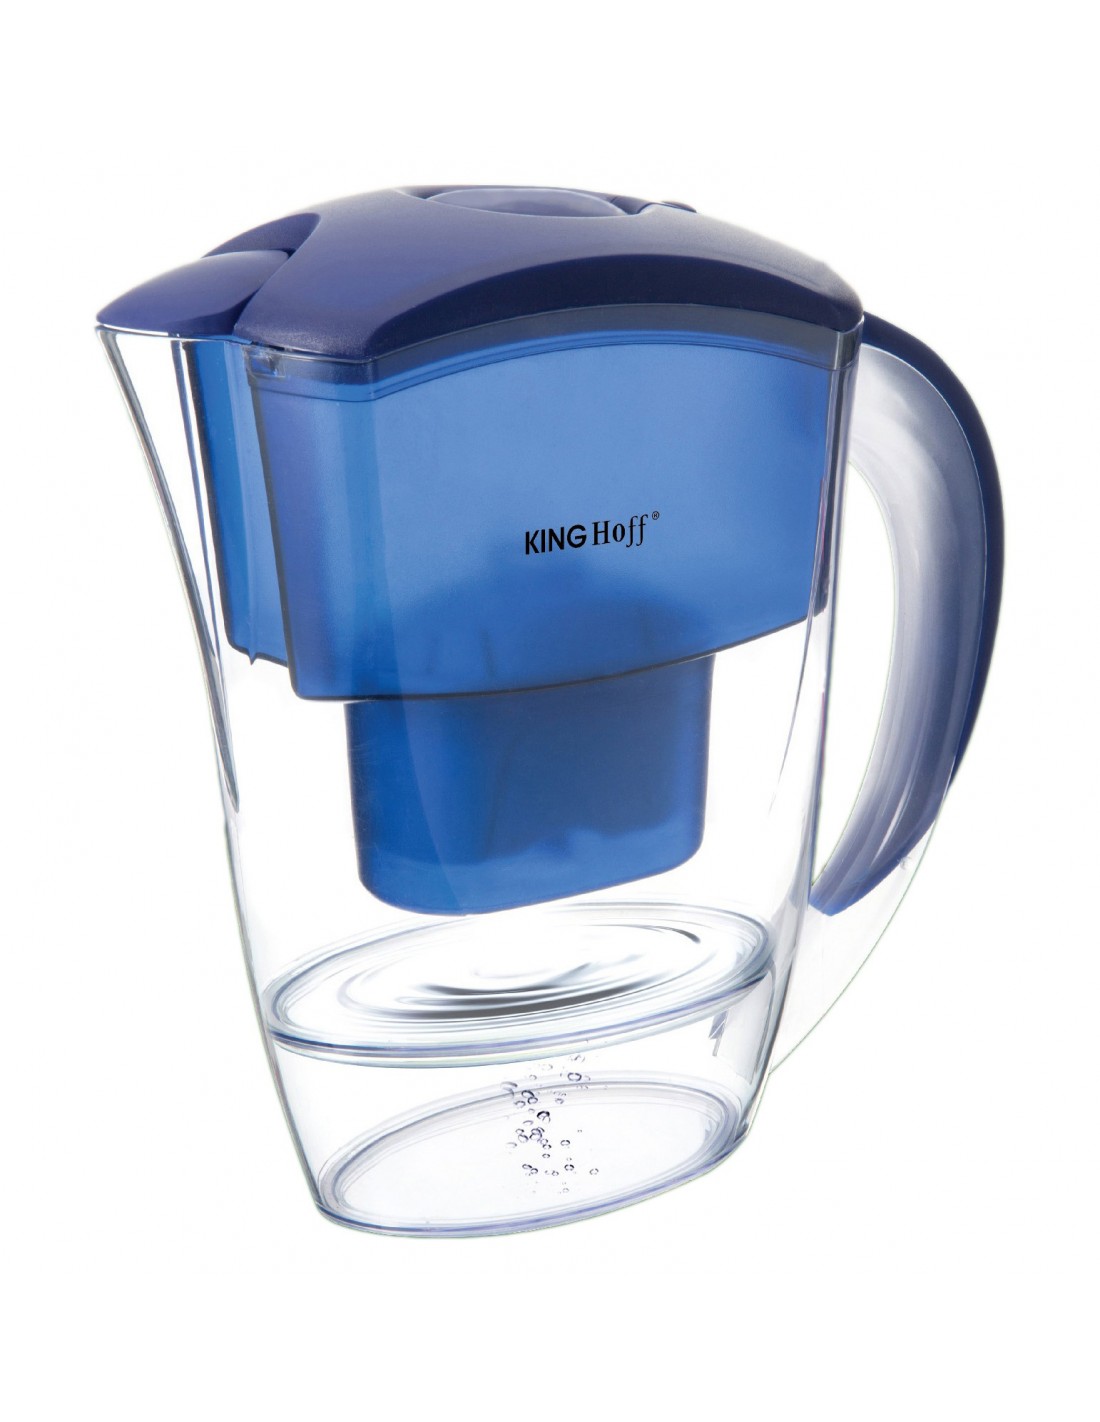 Kinghoff Wasserfilter - Krug mit Filter - KH6141